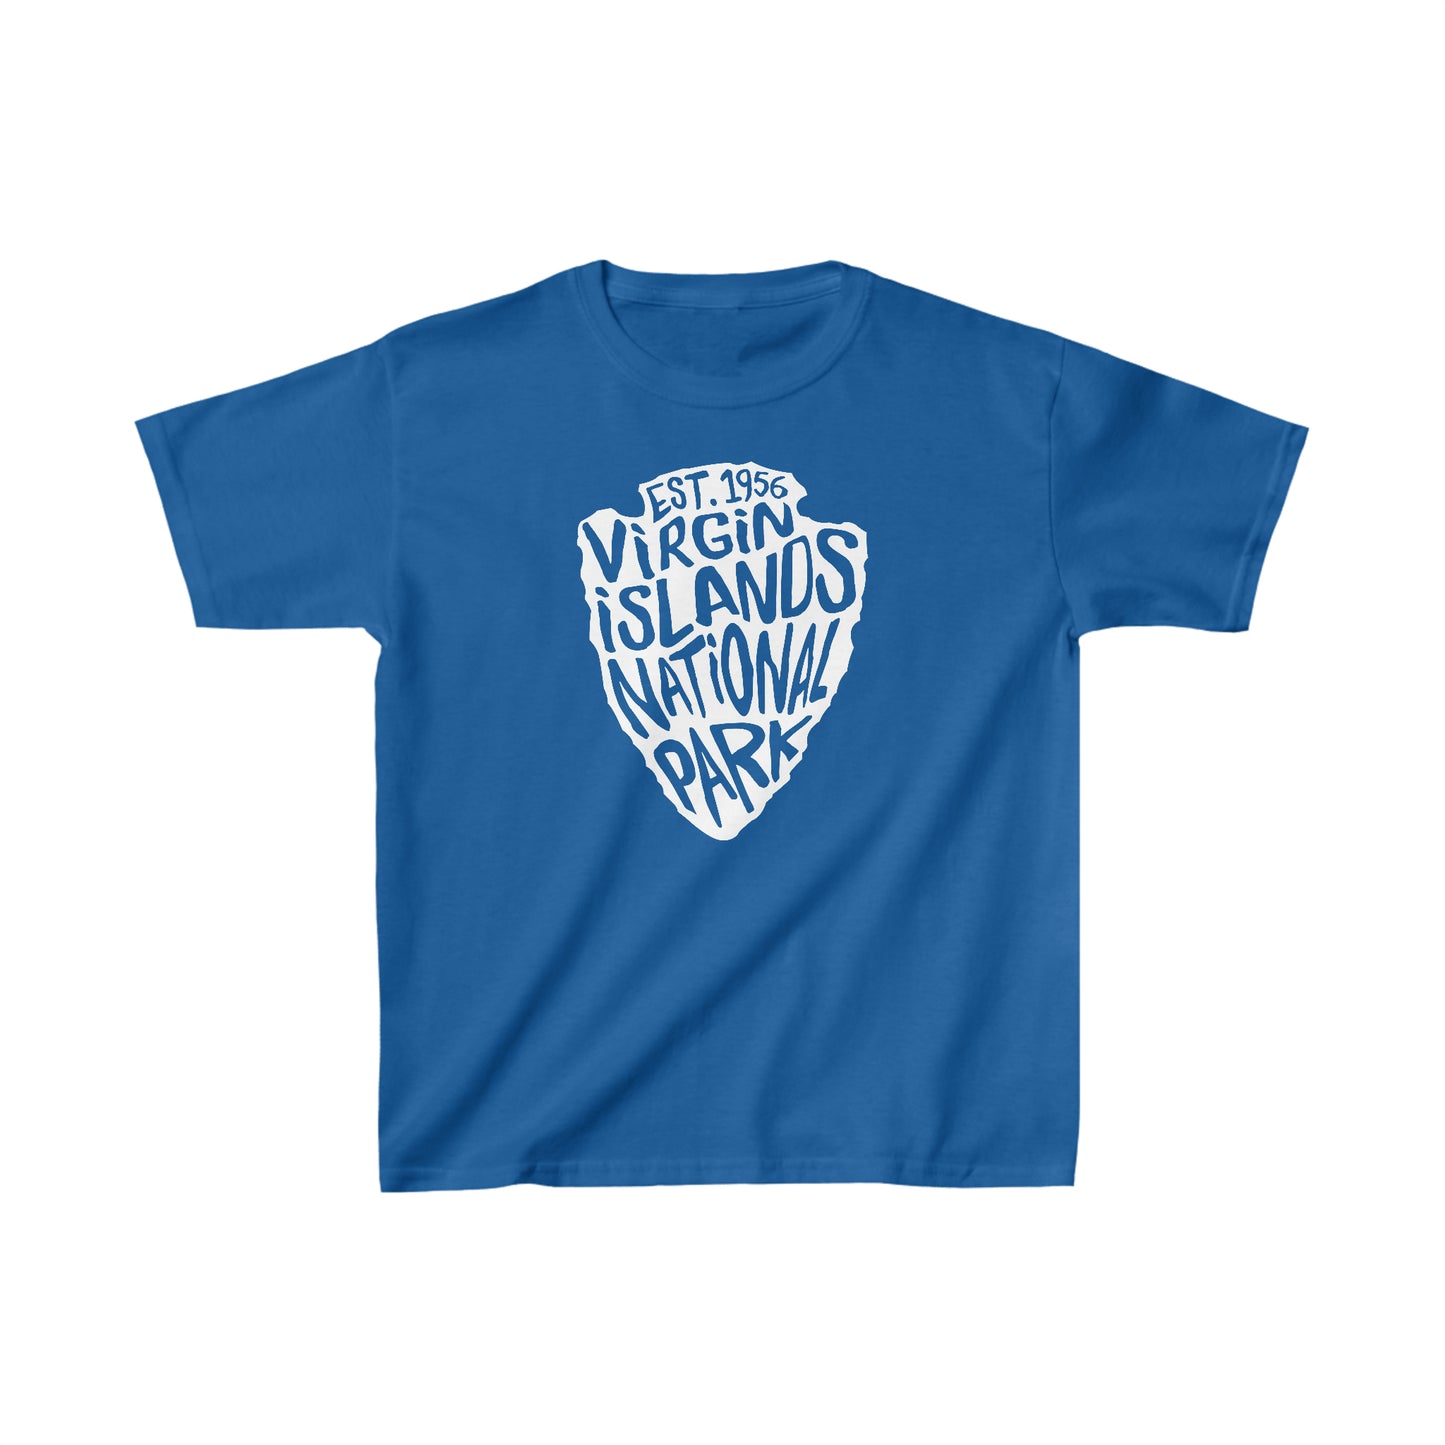 Virgin Islands National Park Child T-Shirt - Arrowhead Design